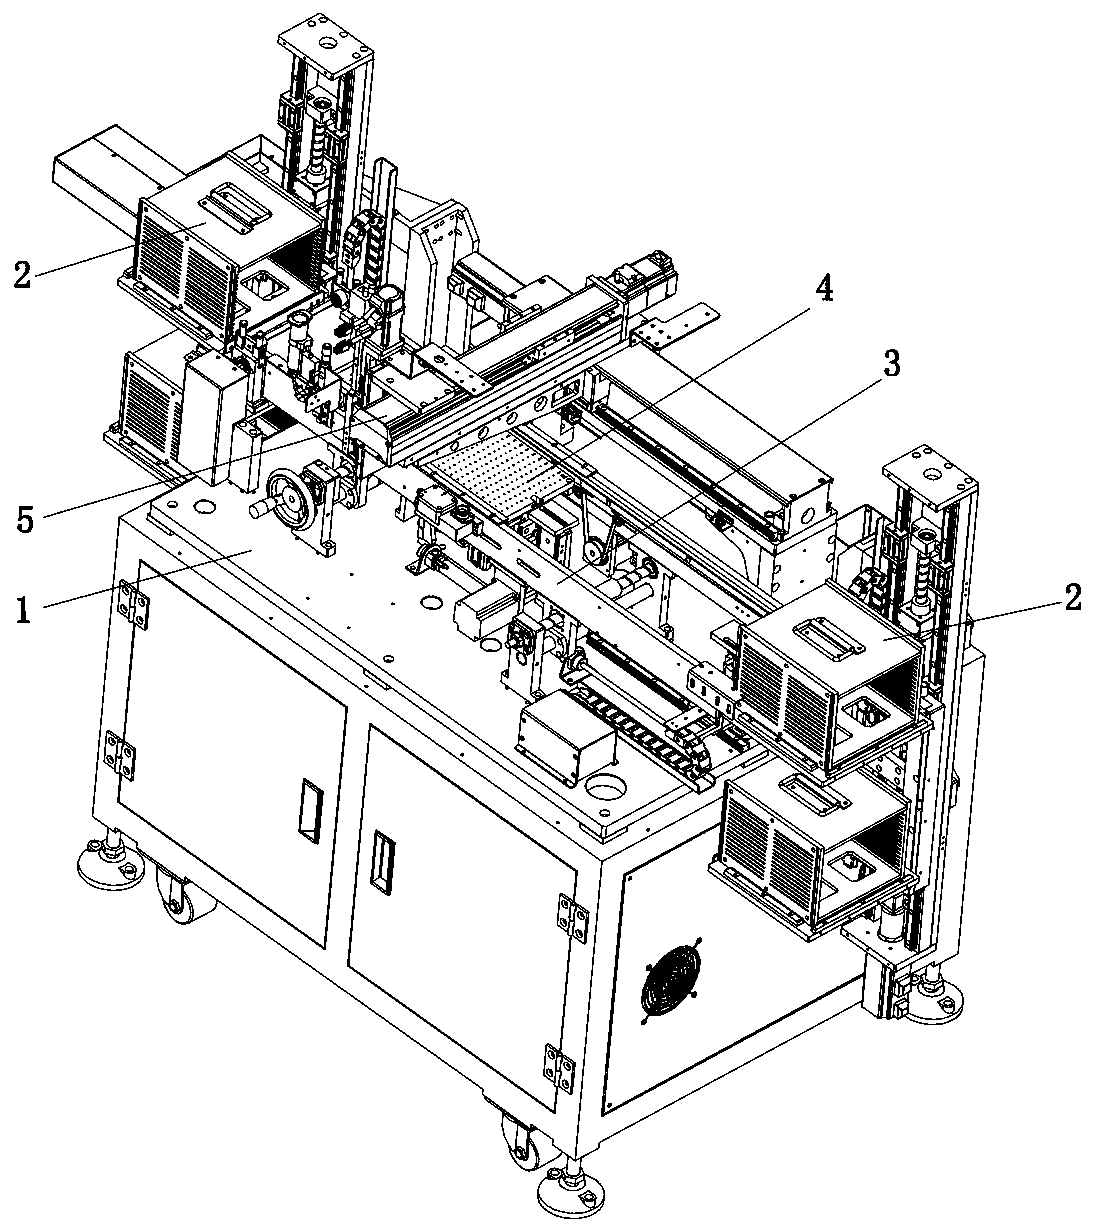 Full-automatic single-rail glue dispenser and glue dispensing process thereof